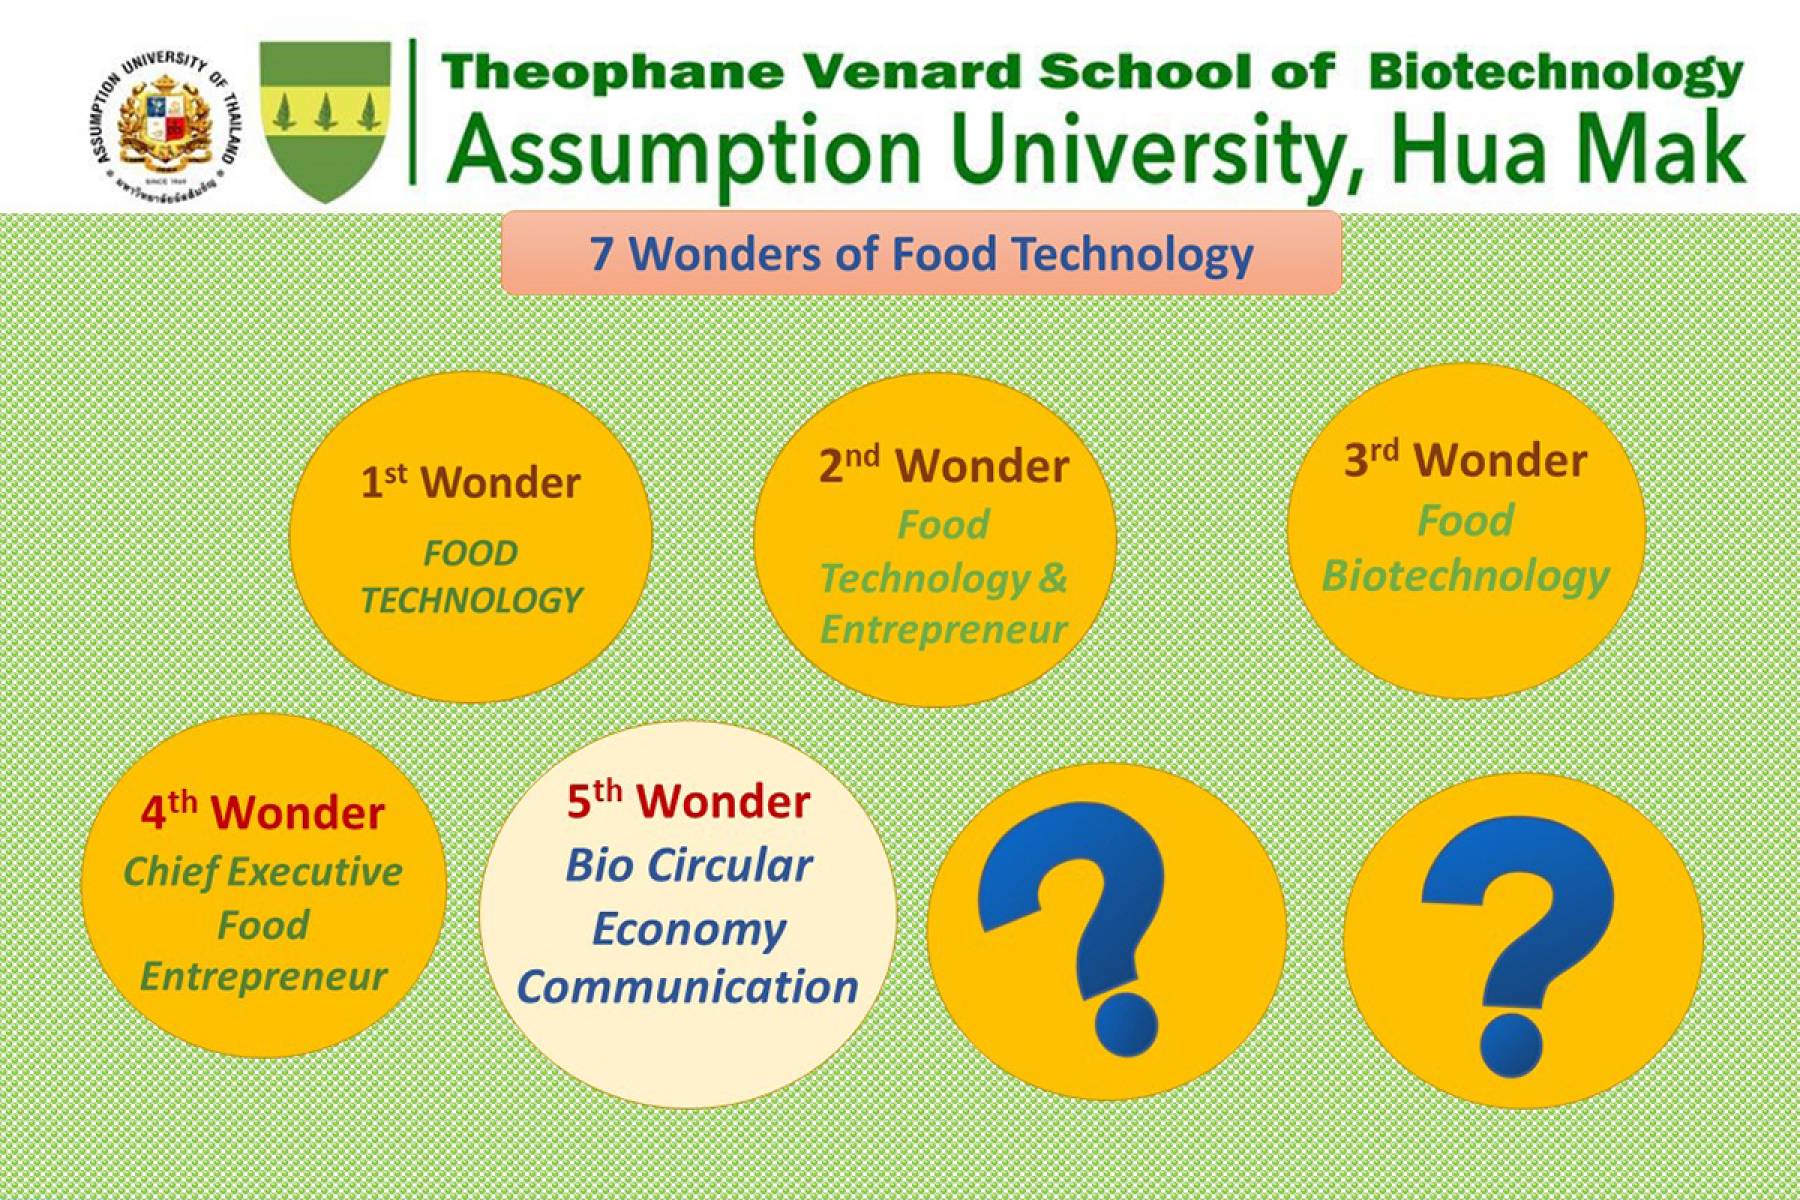 5th Wonder: Bio Circular Economy Communication # Driving the Sustainable Future